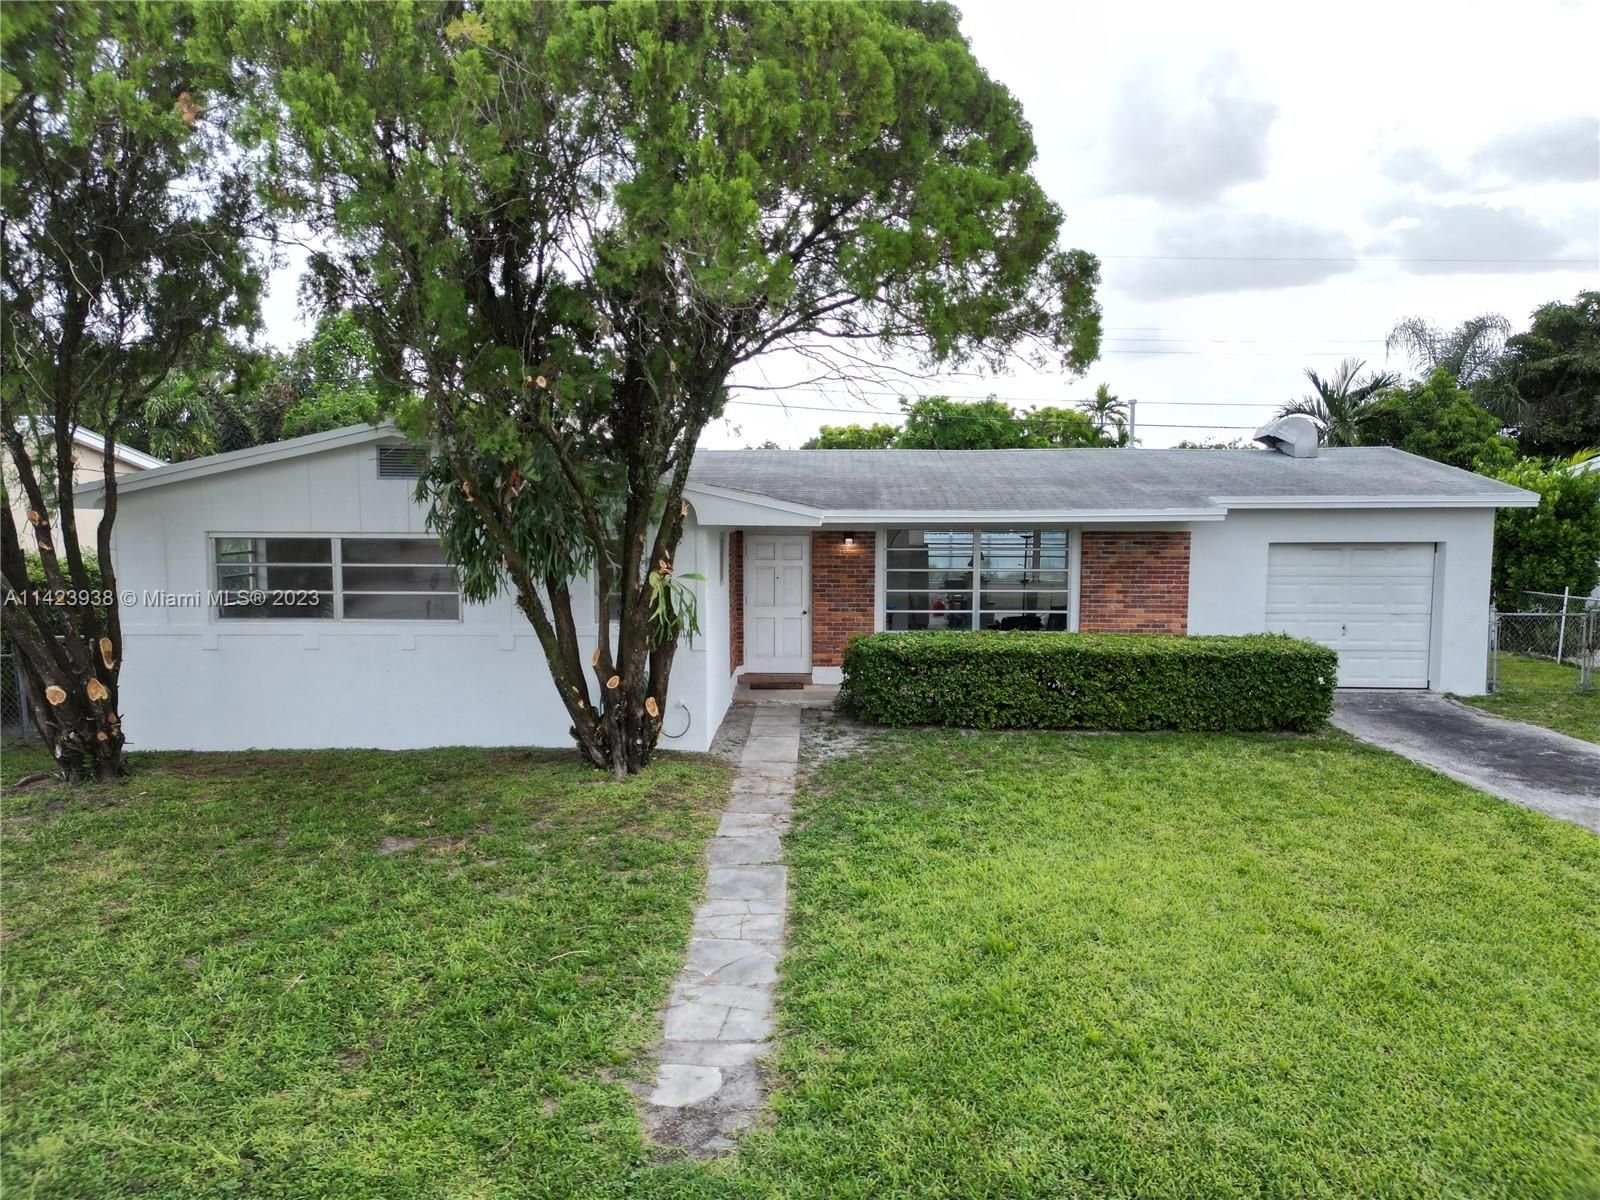 Real estate property located at 2030 83rd Ct, Miami-Dade County, Miami, FL